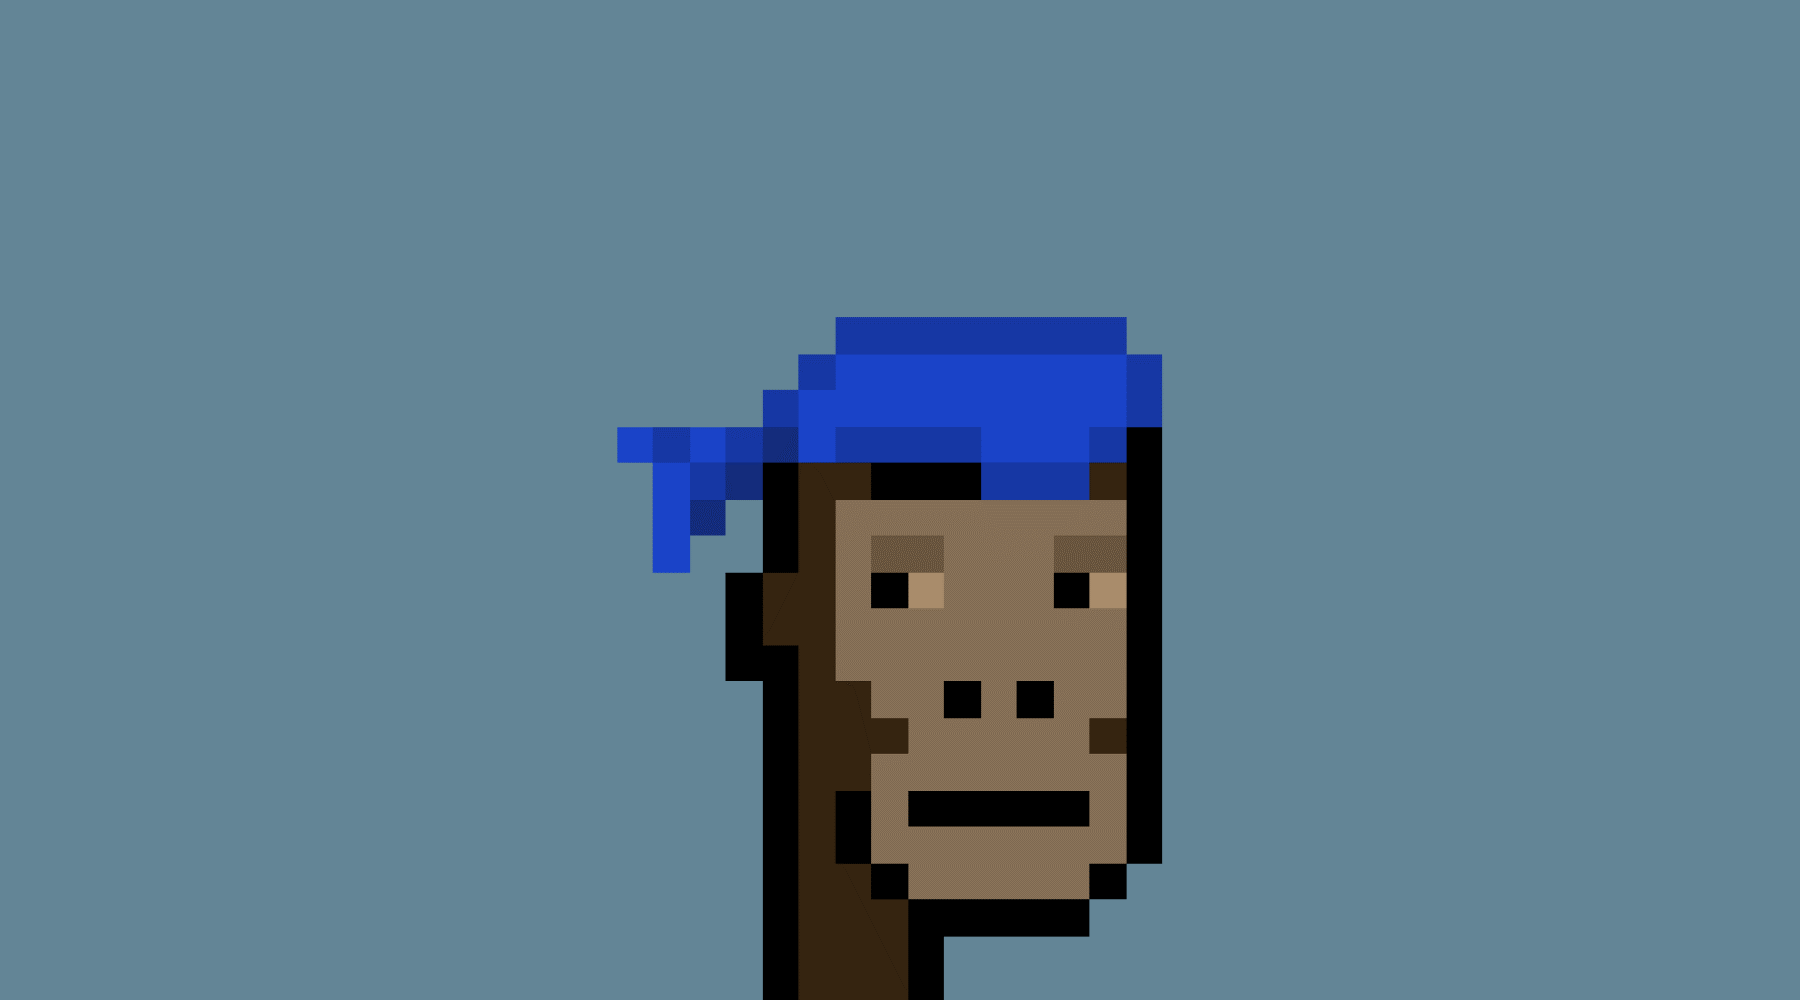 Larva Labs "CryptoPunk #4156" — a pixelated Ape Punk wearing a blue bandana